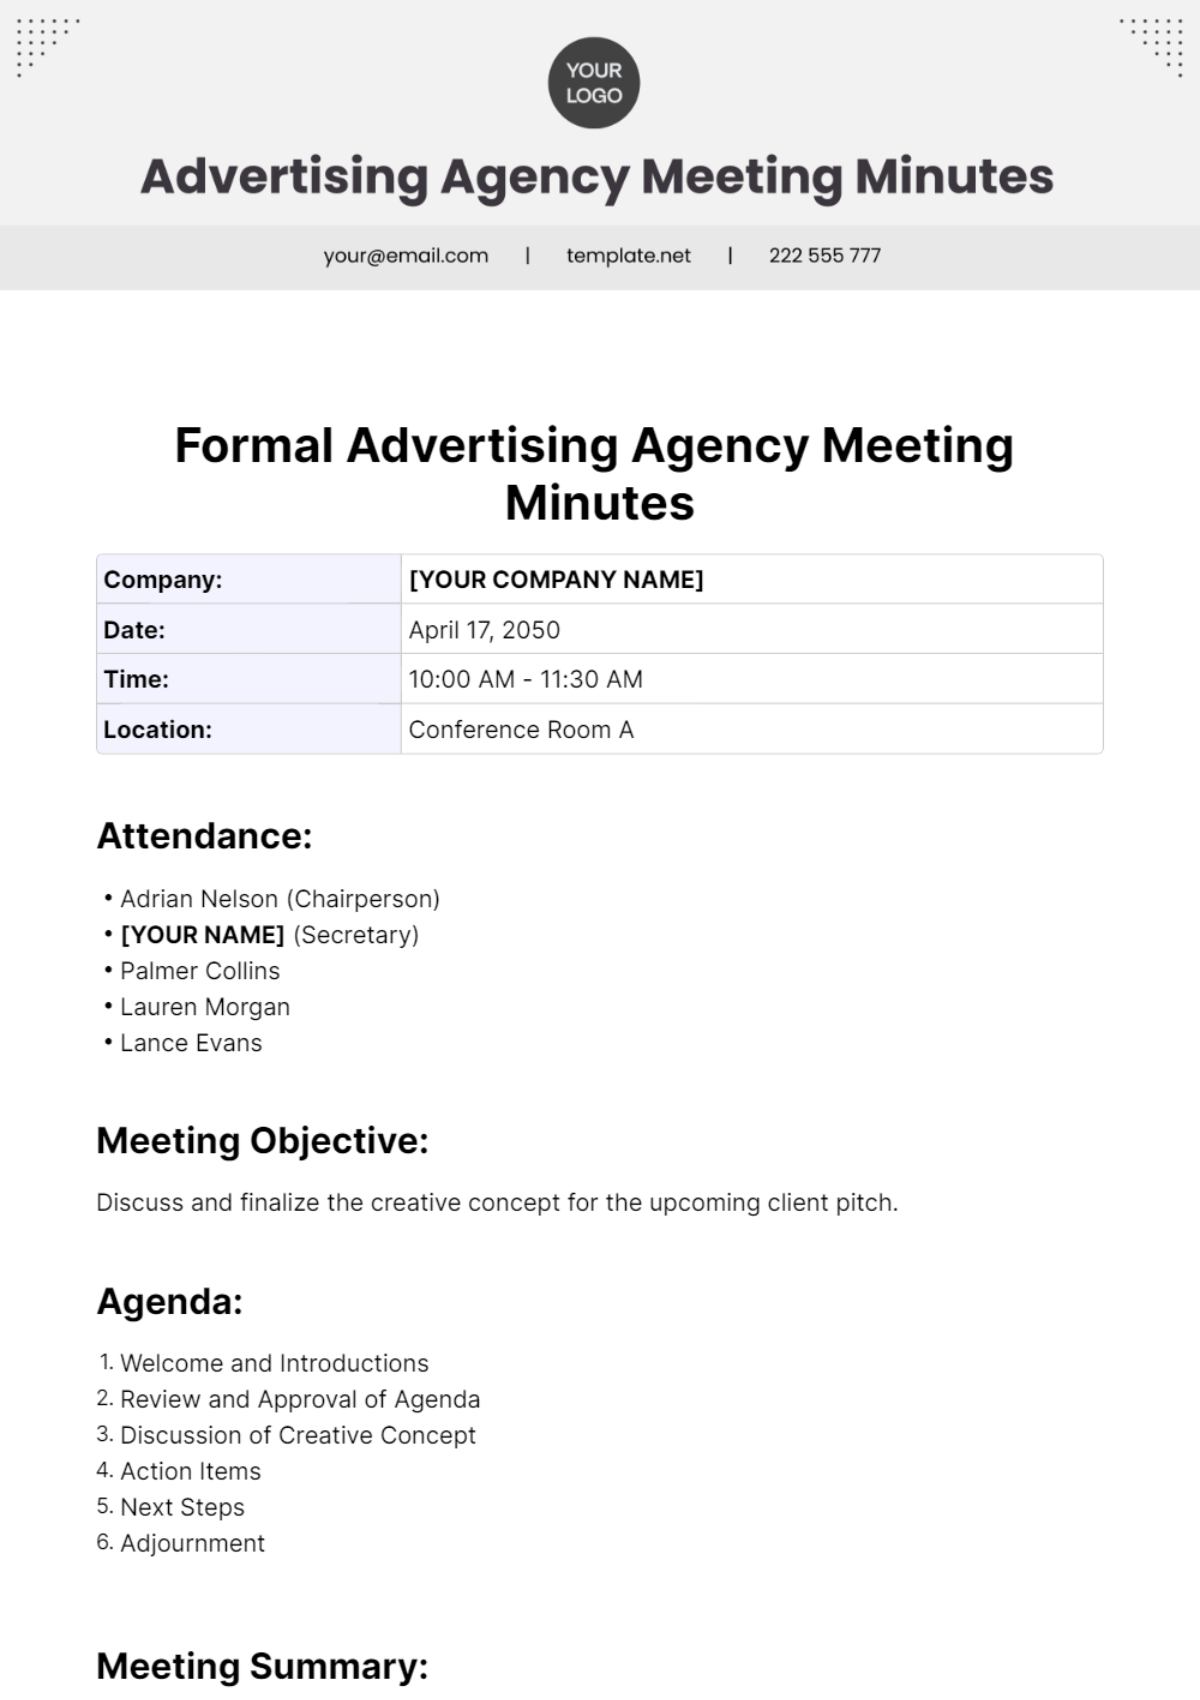 Formal Advertising Agency Meeting Minutes Template